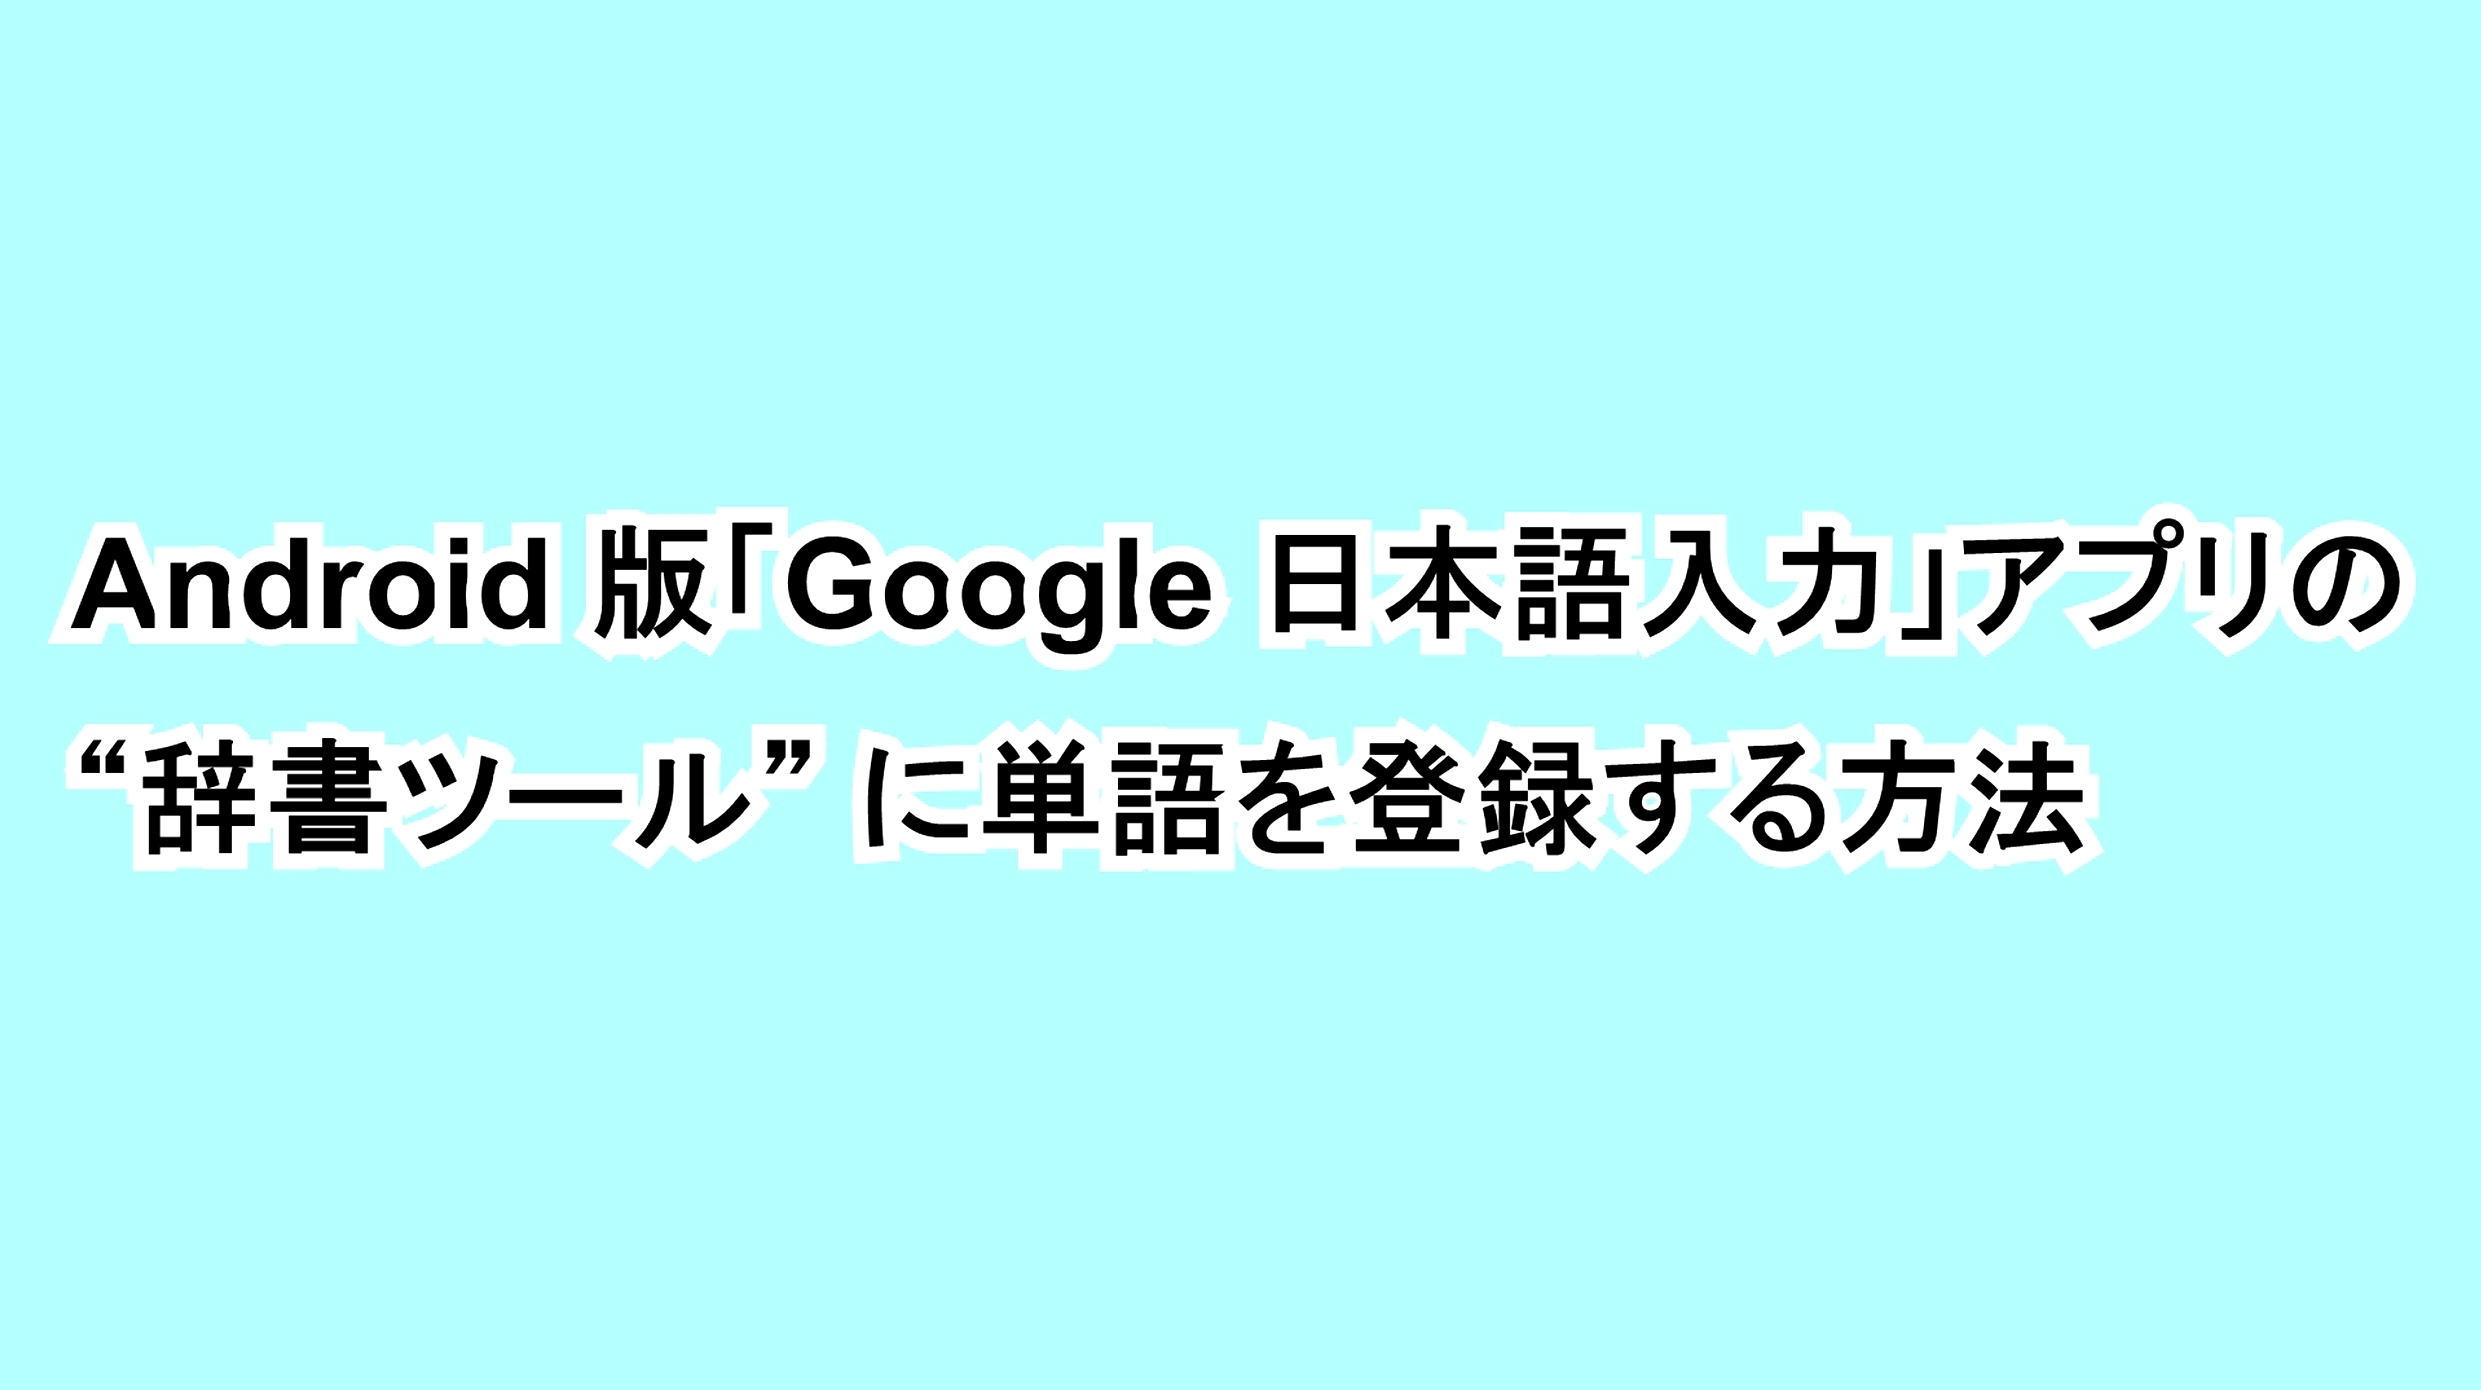 Android版「Google 日本語入力」アプリの“辞書ツール”に単語を登録する方法